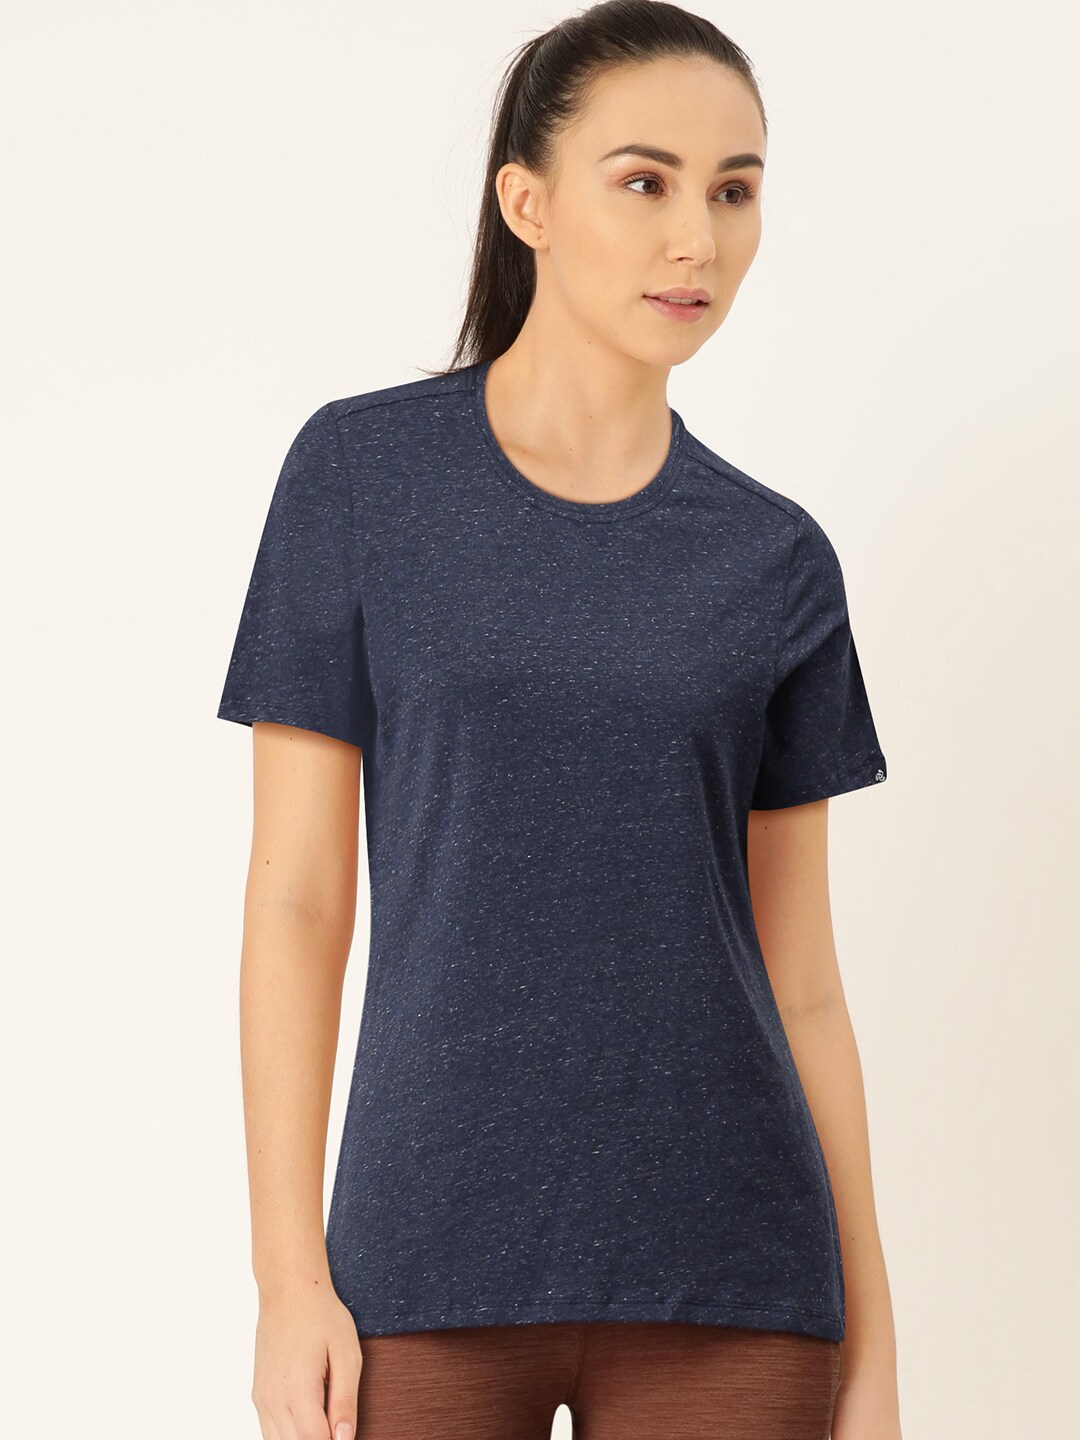 Jockey Women Navy Blue Solid Round Neck T-shirt Price in India